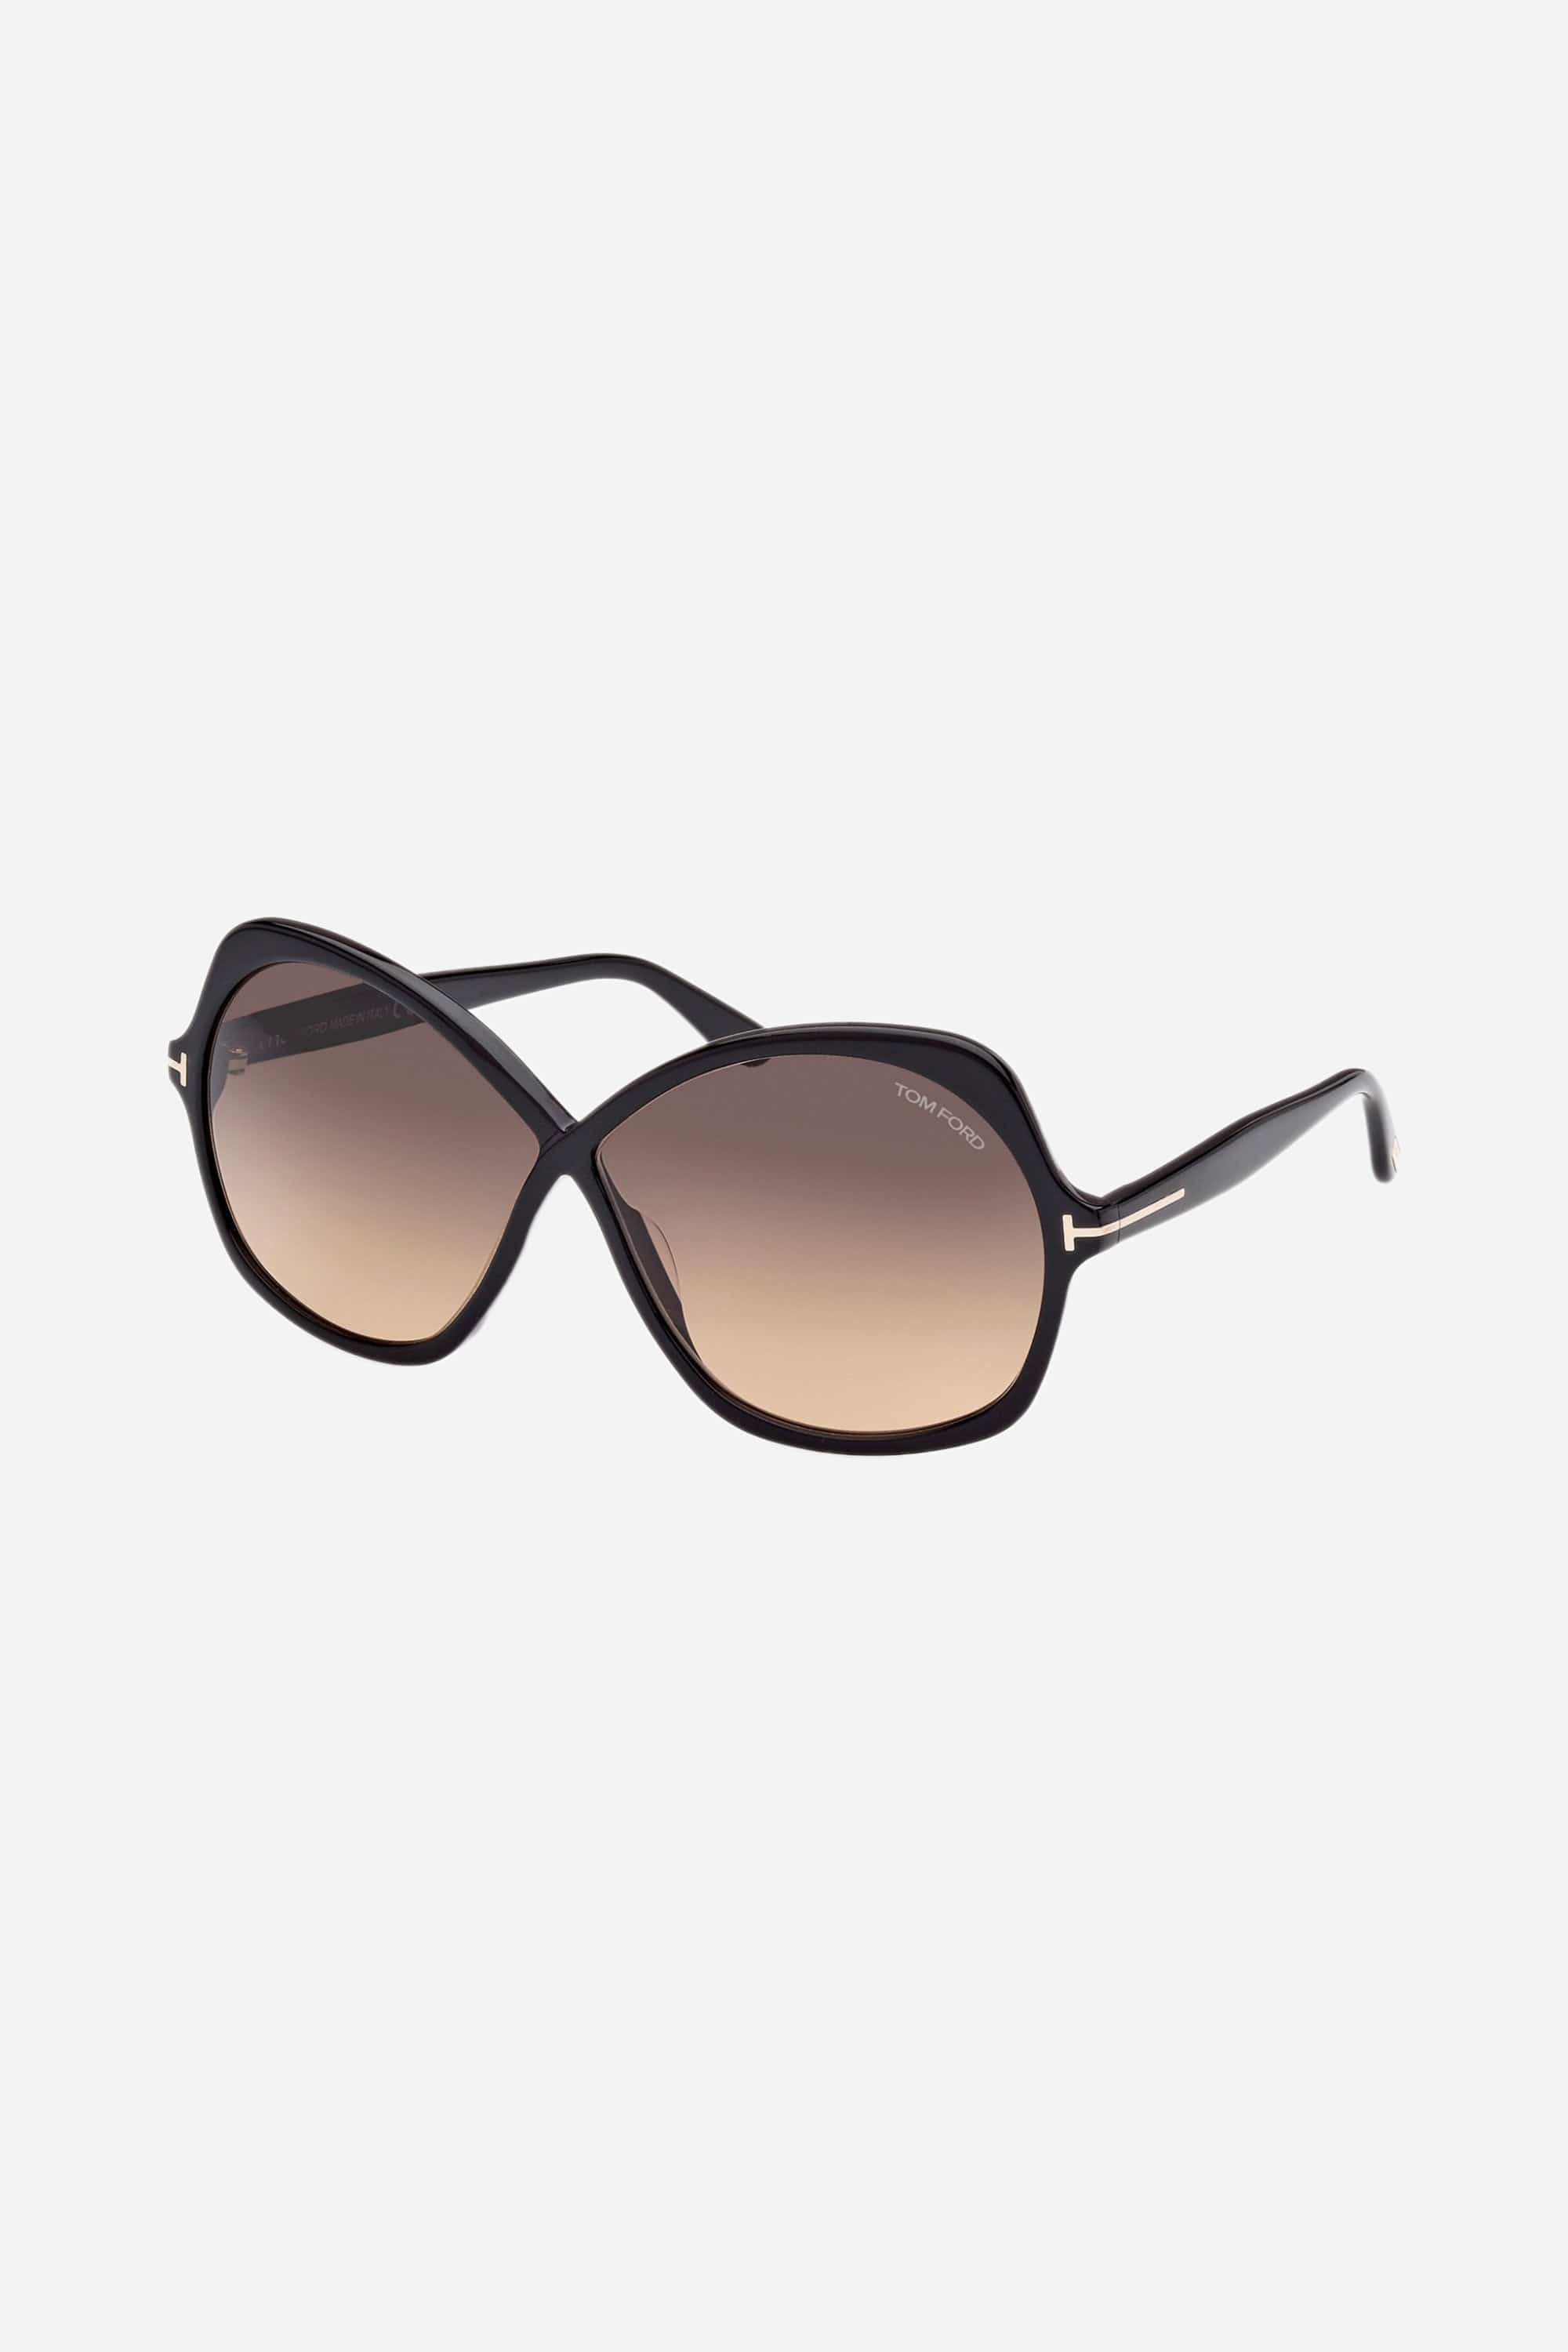 Tom Ford Rosemin butterfly shinny black sunglasses - Eyewear Club